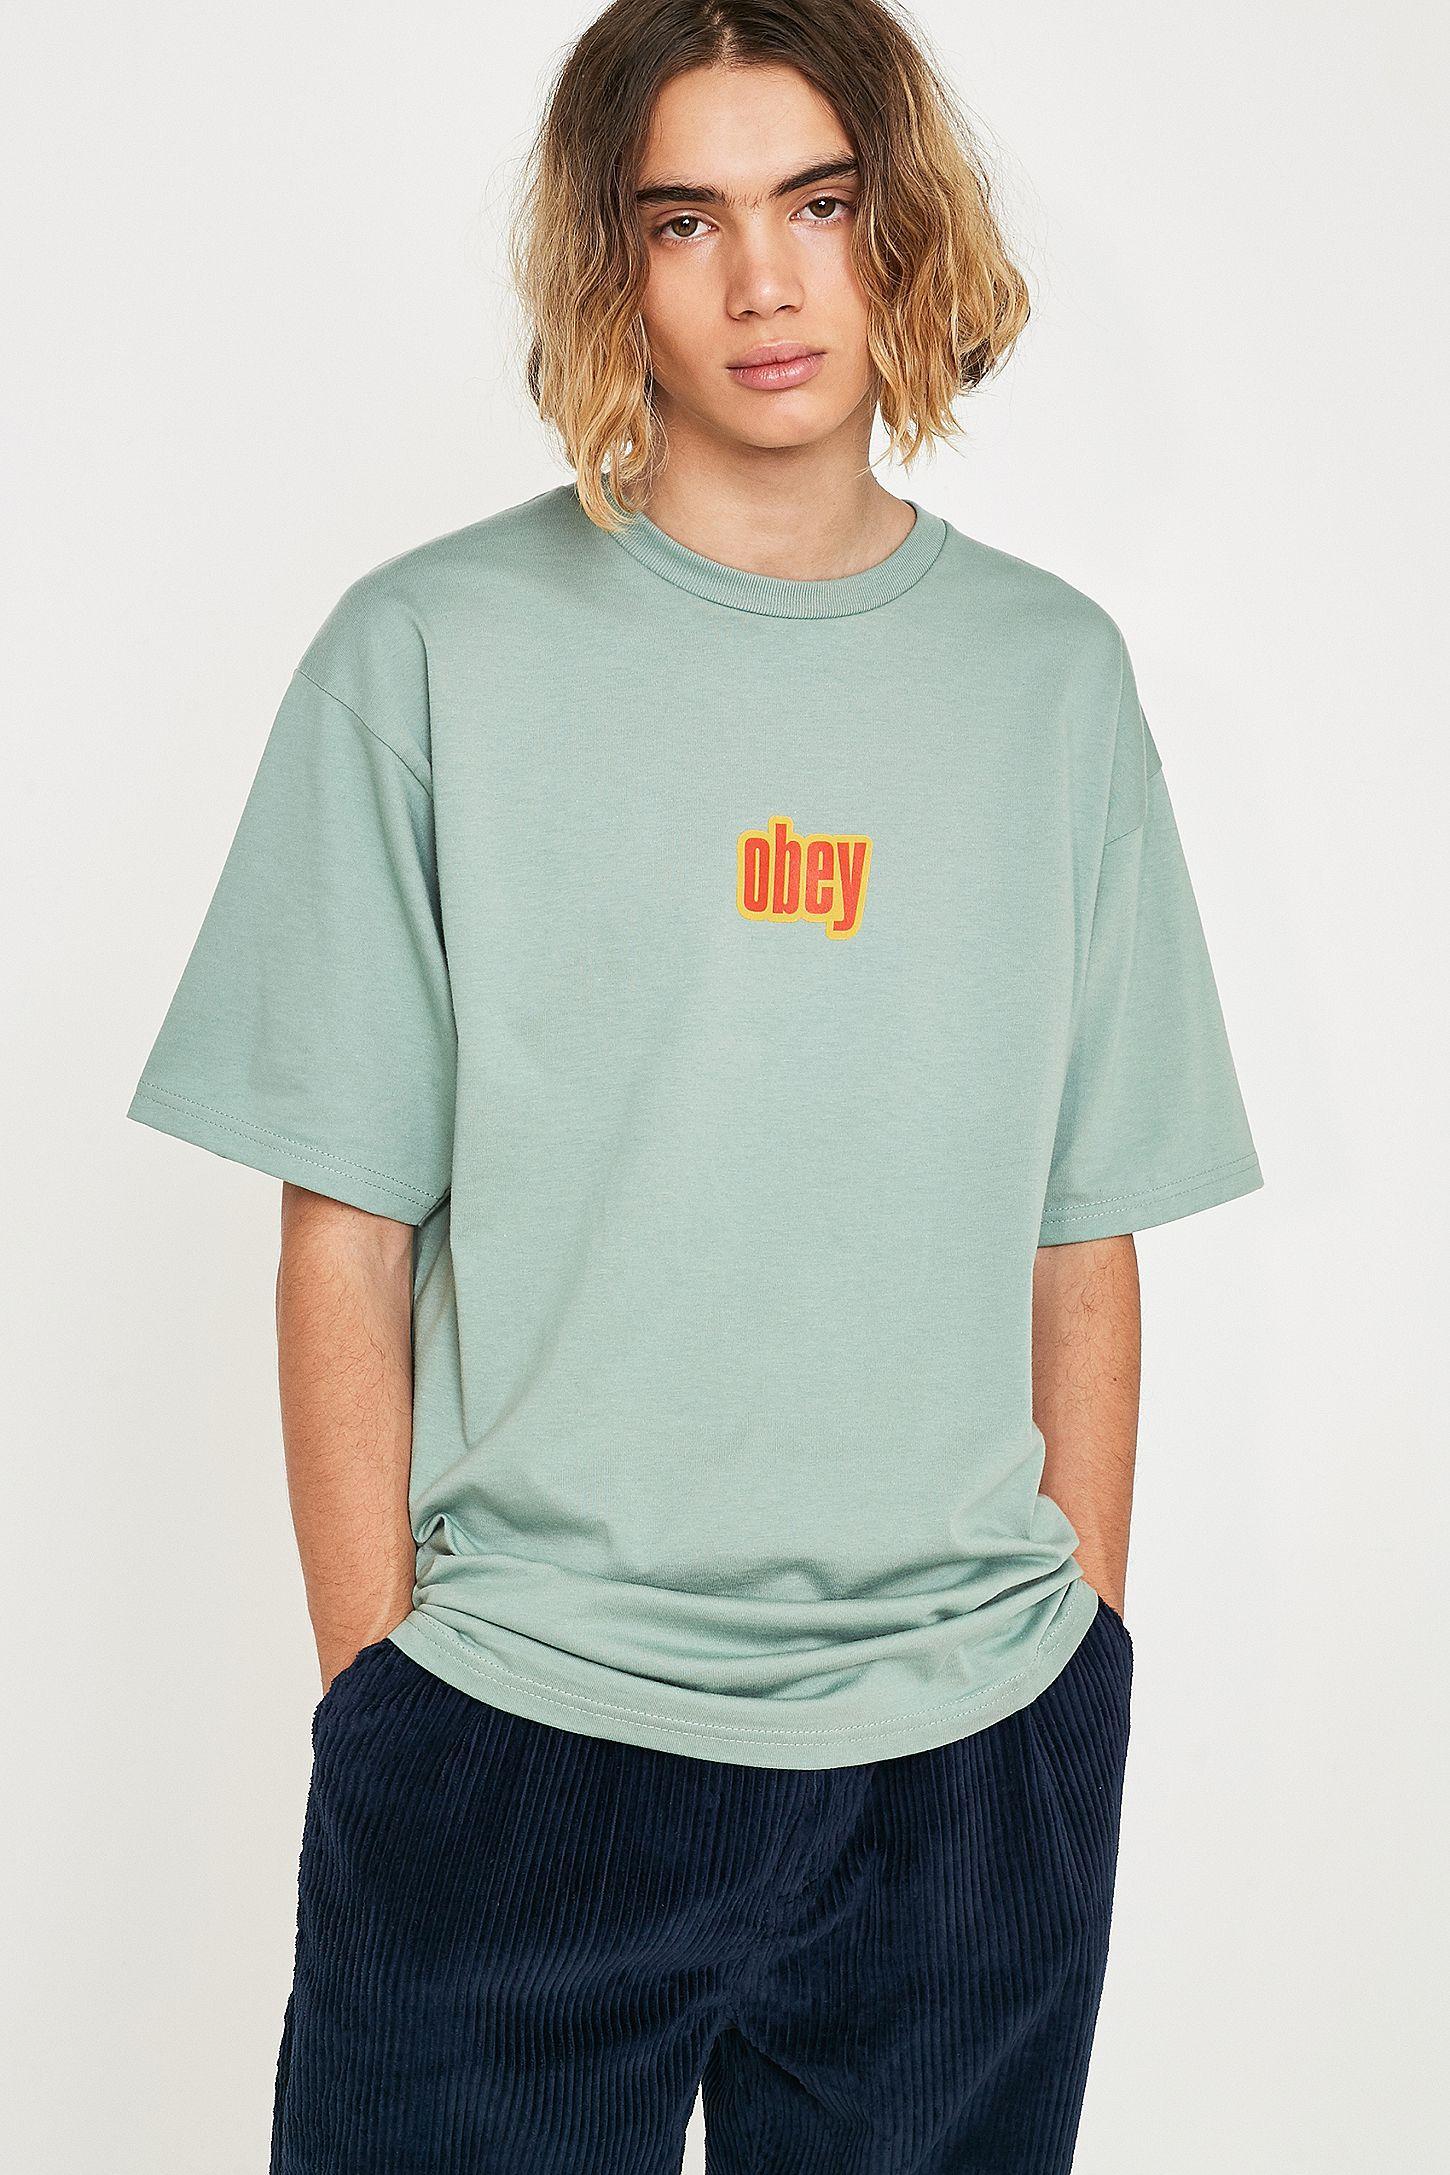 Obey Orange Logo - OBEY '90s Box Logo Green T-Shirt | Urban Outfitters UK